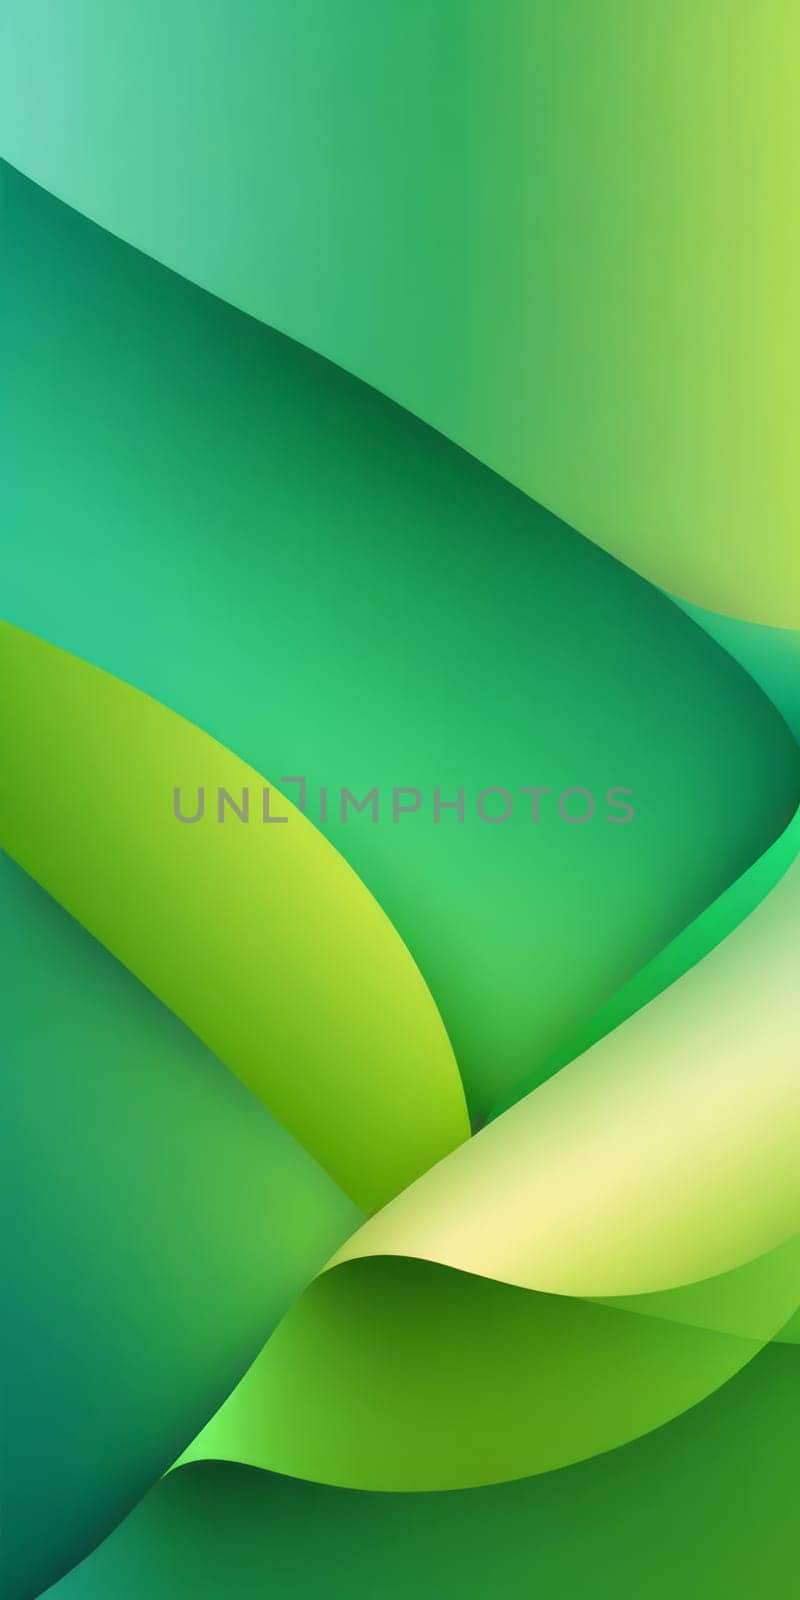 Asymmetrical Shapes in Green Lightgreen by nkotlyar